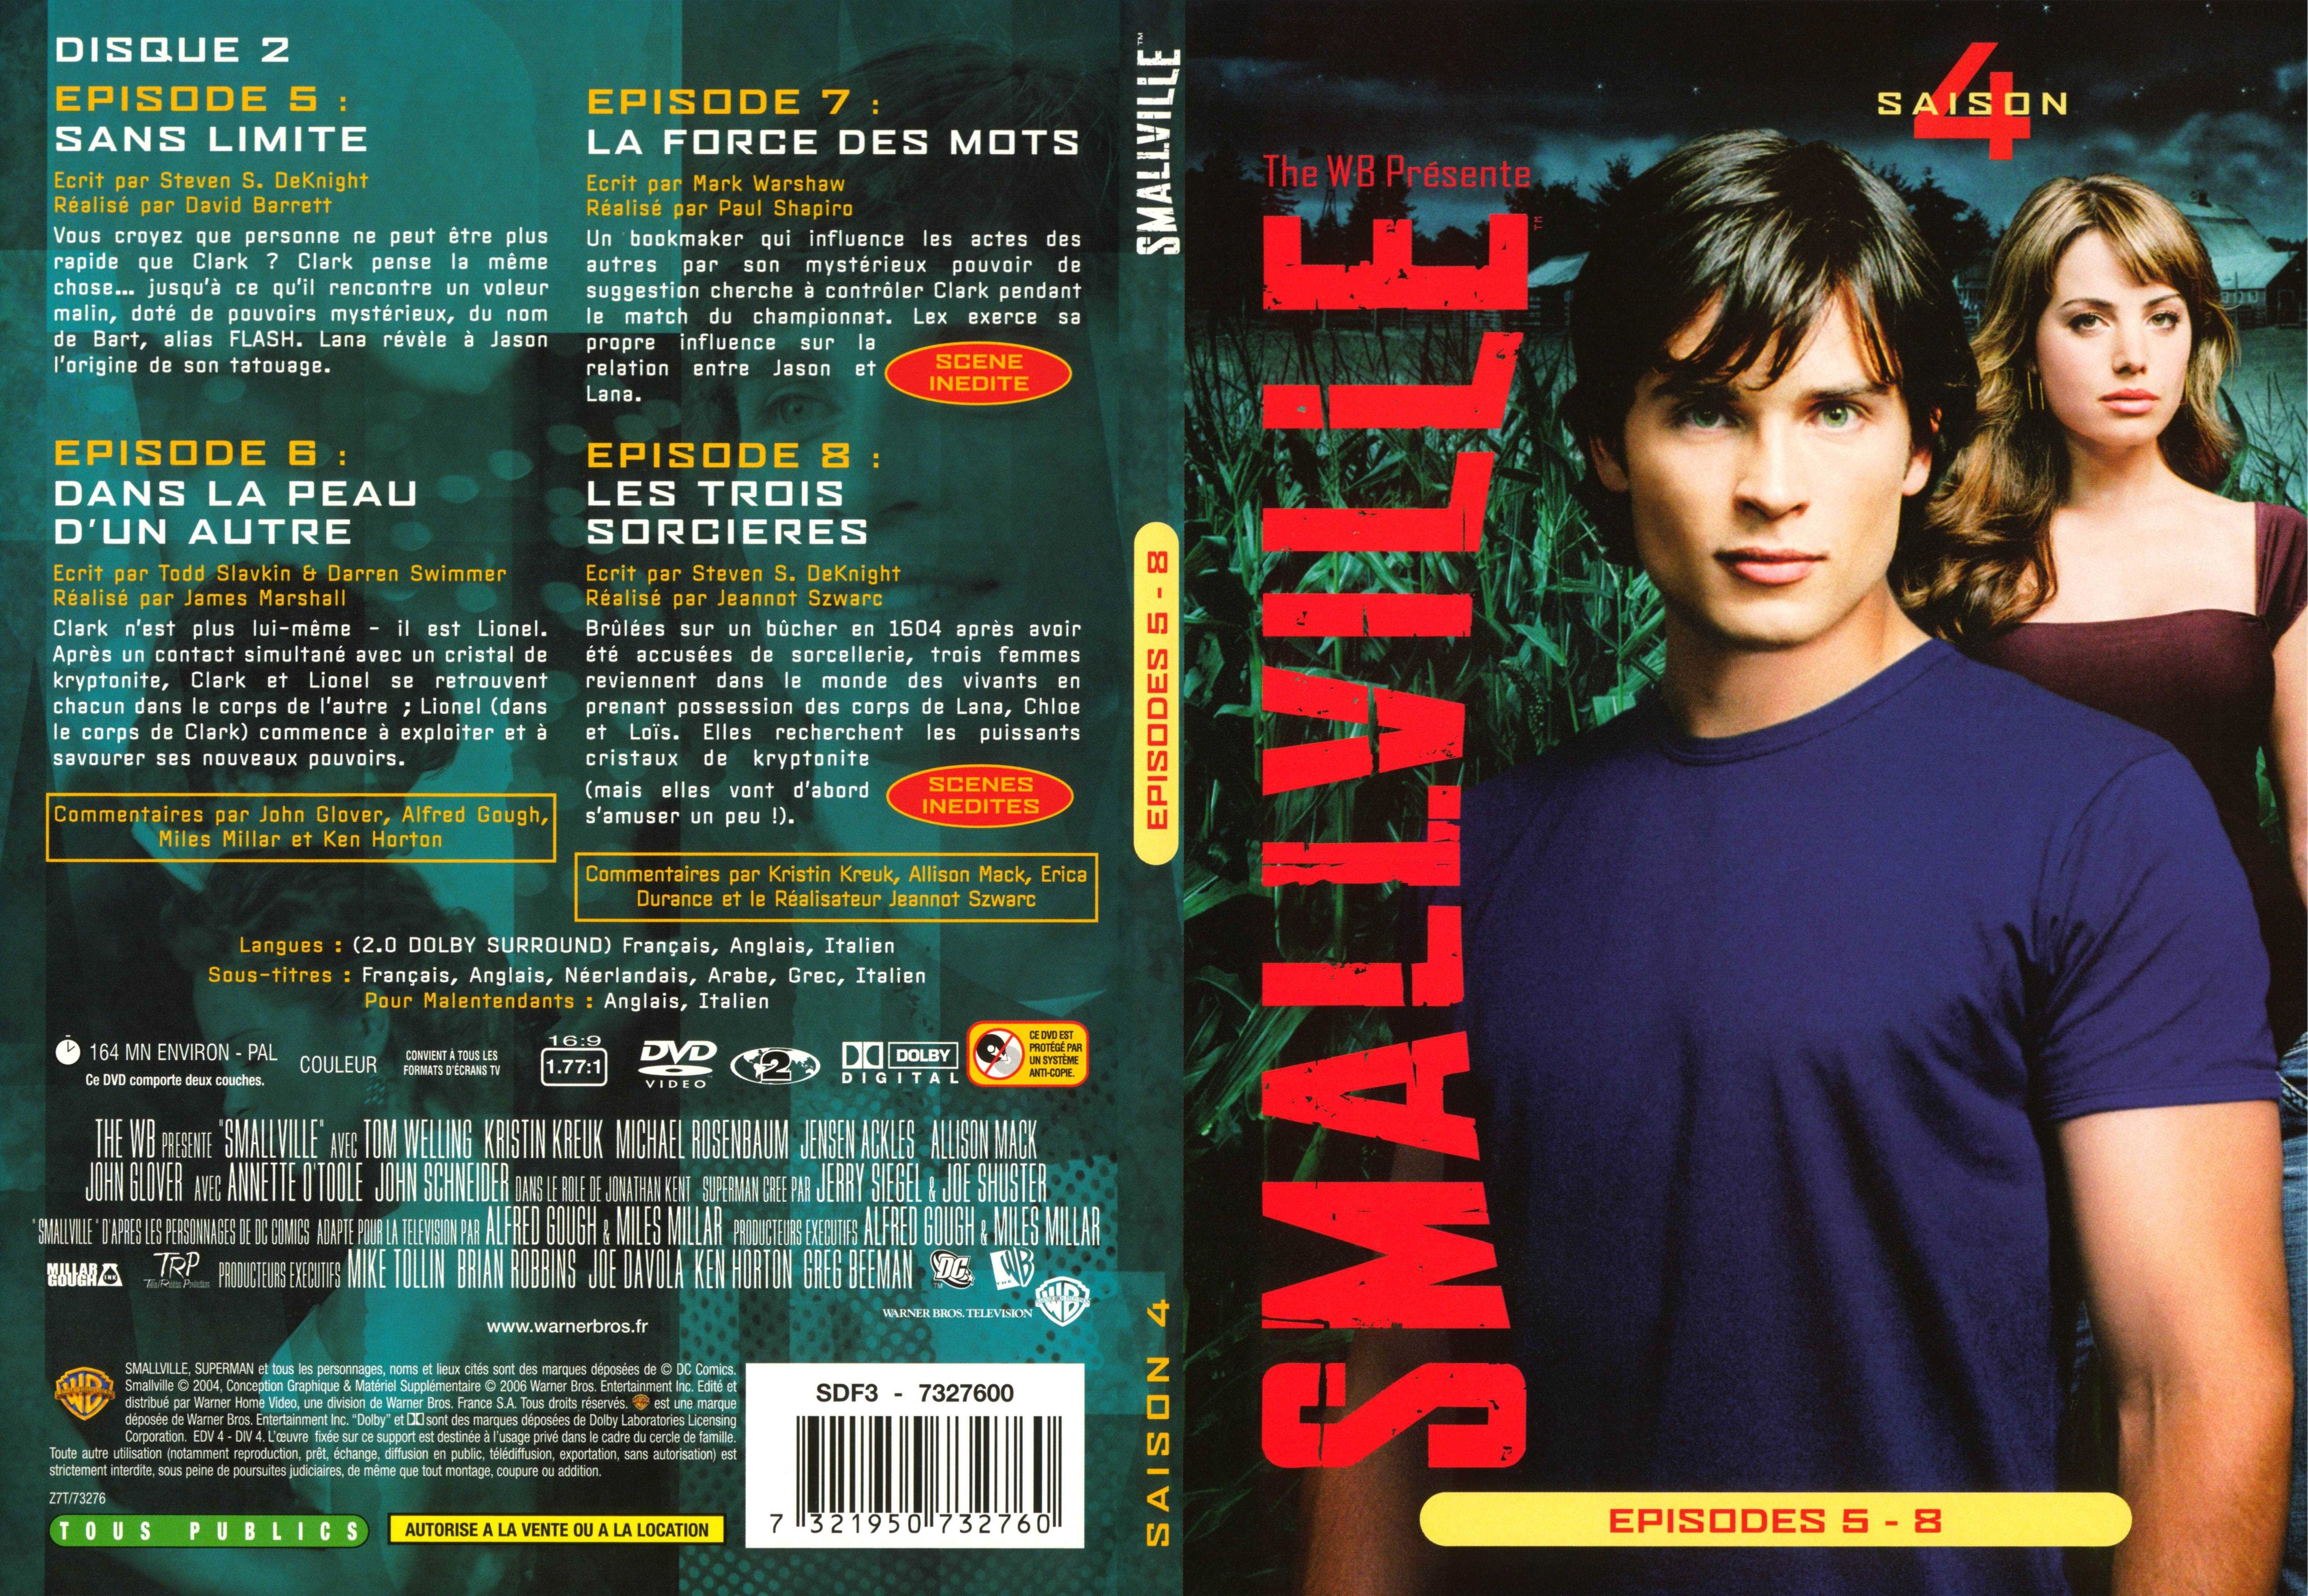 Jaquette DVD Smallville saison 4 DVD 2